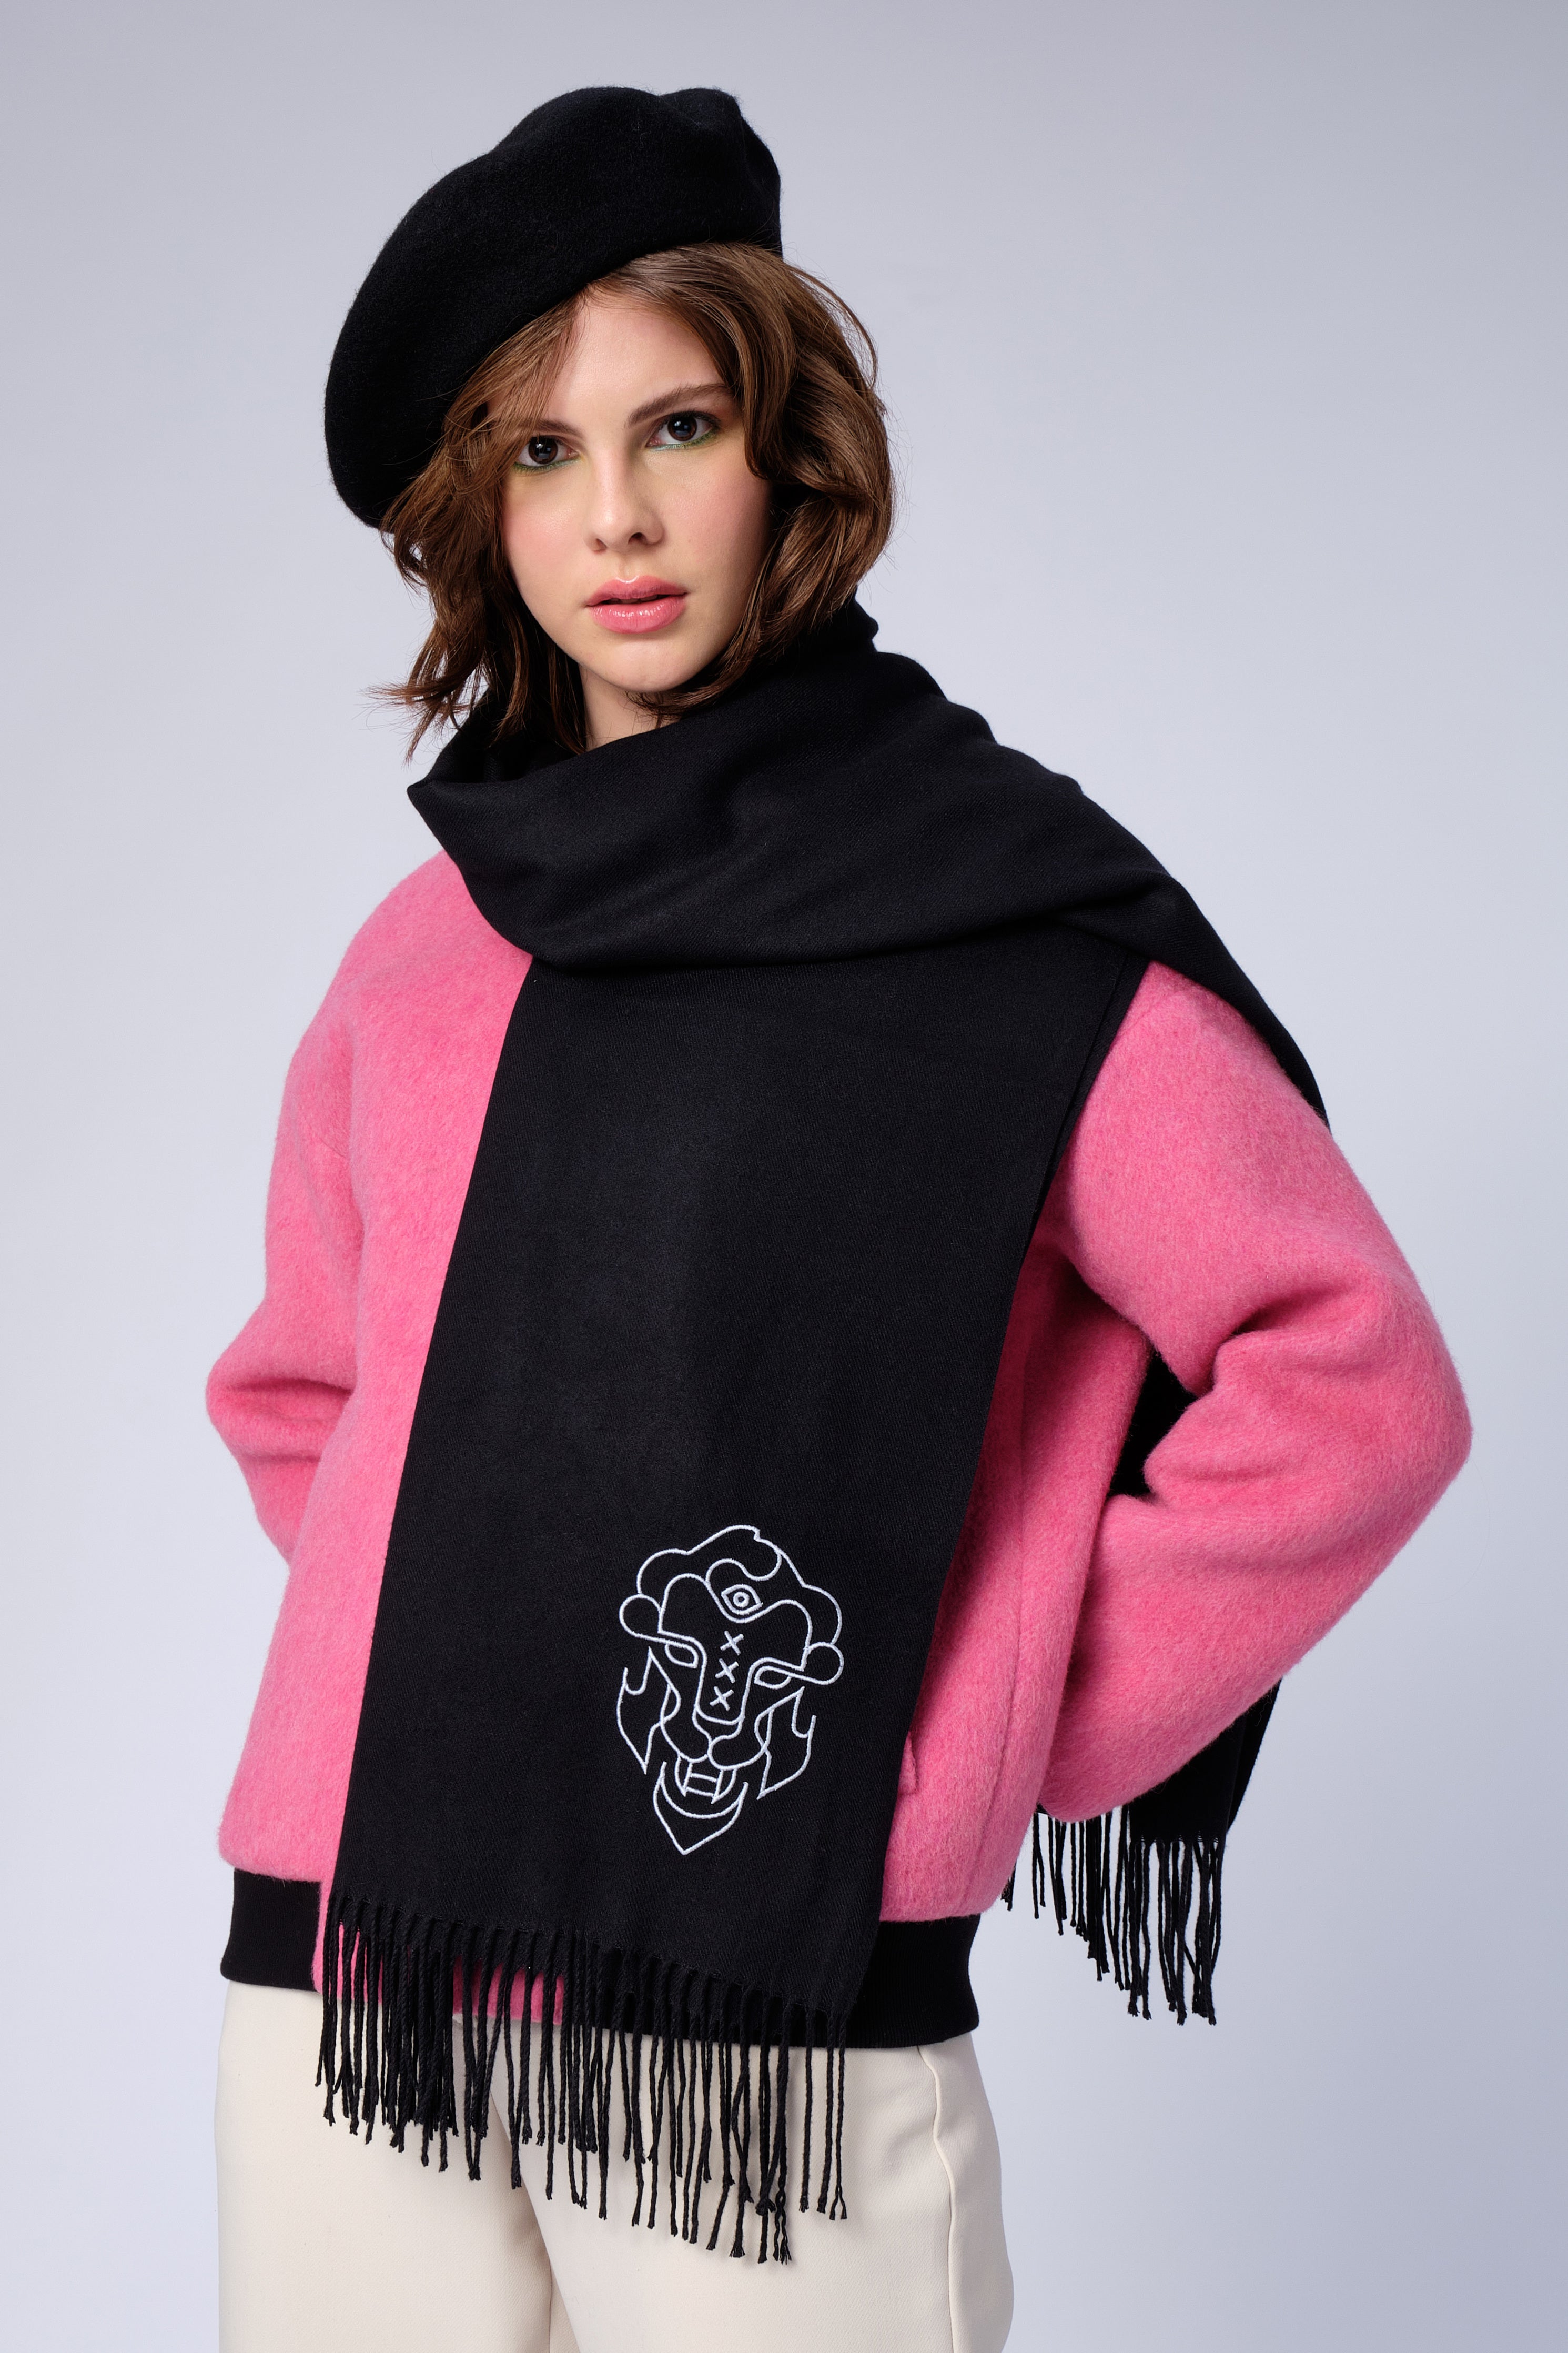 stillsveta black cashmere scarf with Amsterdam lion design